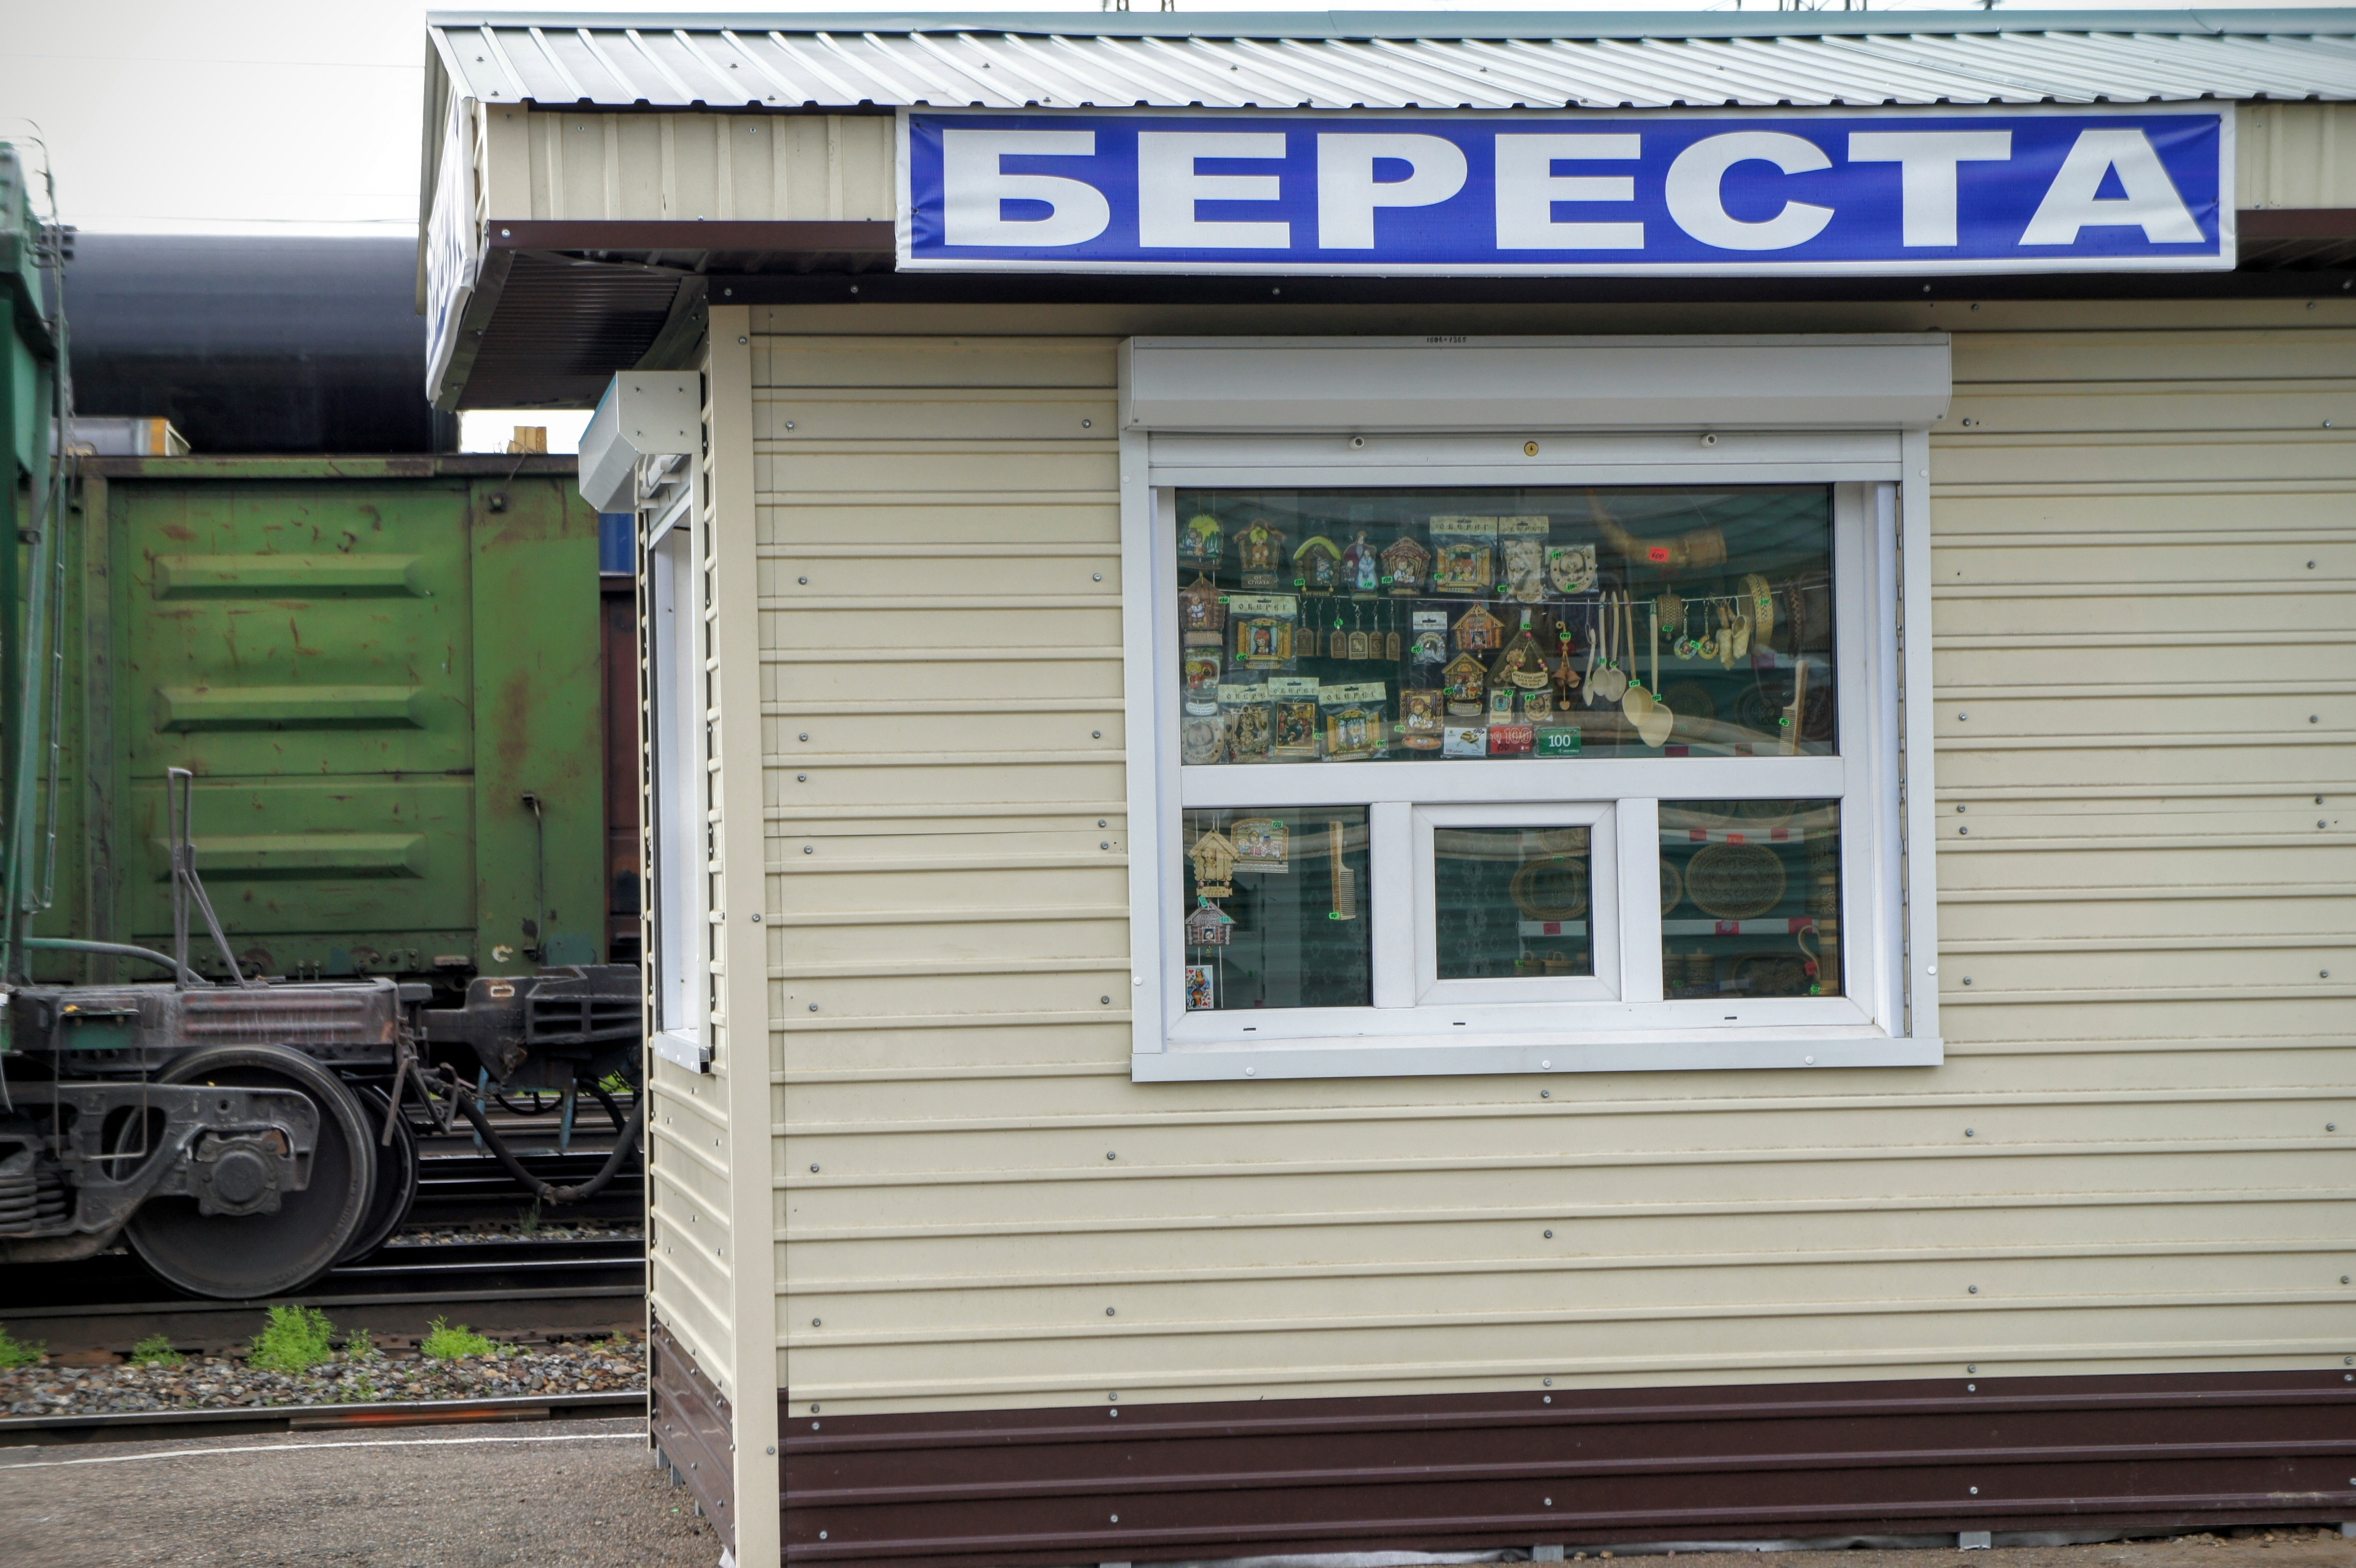 Kiosk, Train, Railway Station, Russia, day, outdoors